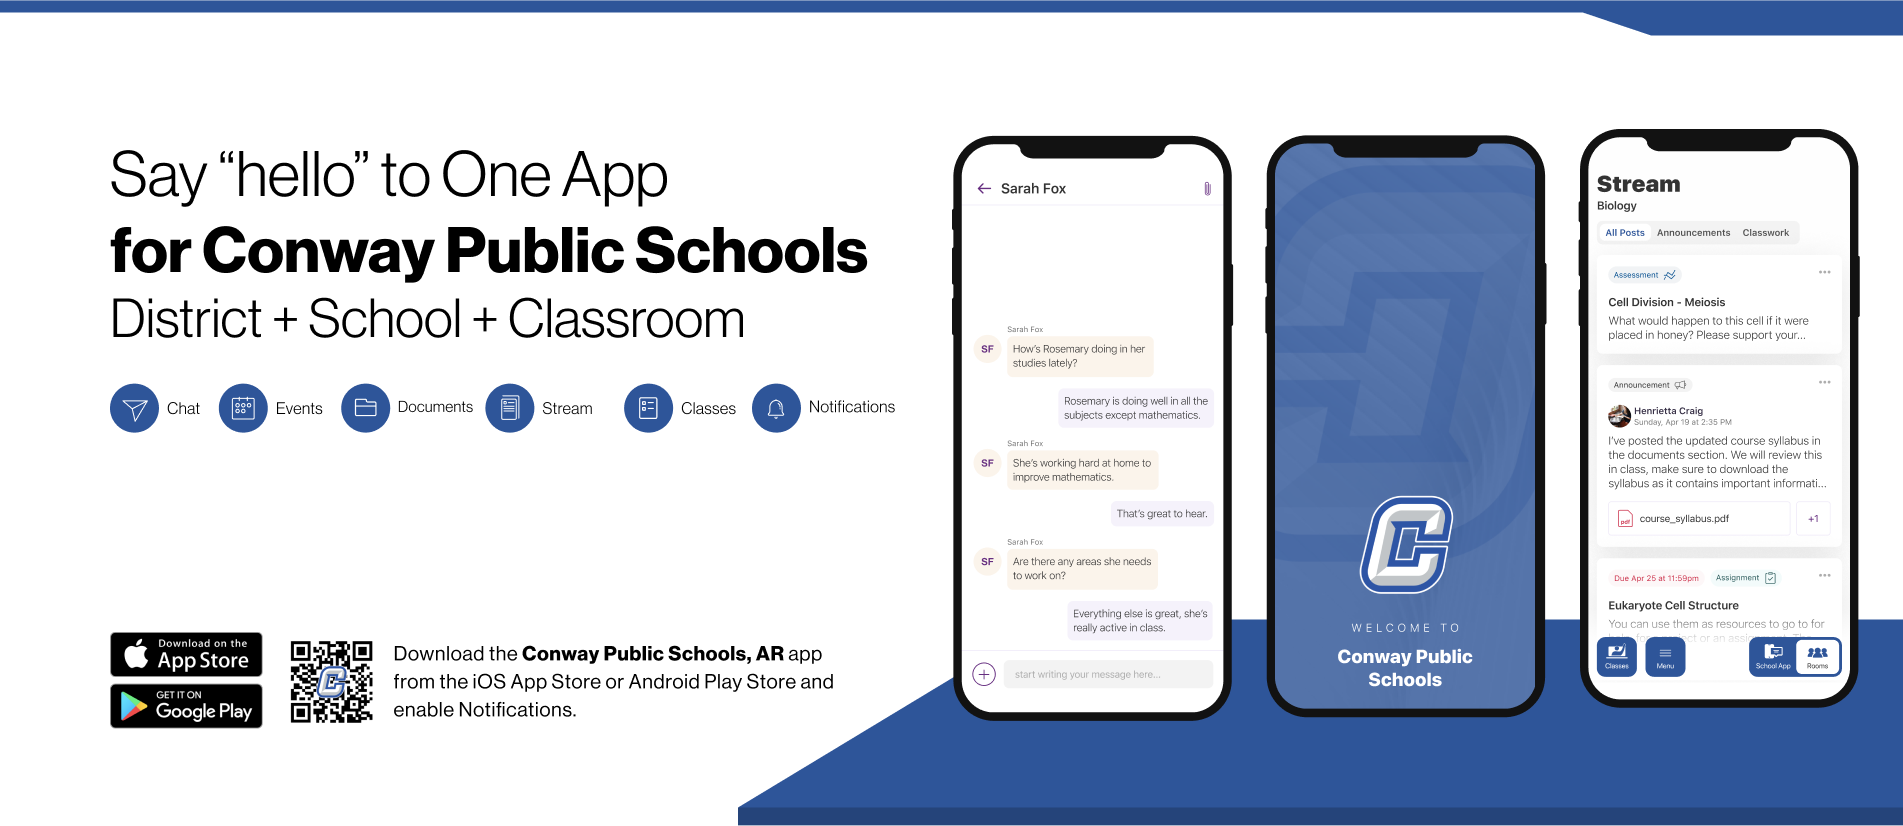 Say Hello to one app for conway public schools. District + School + Classroom